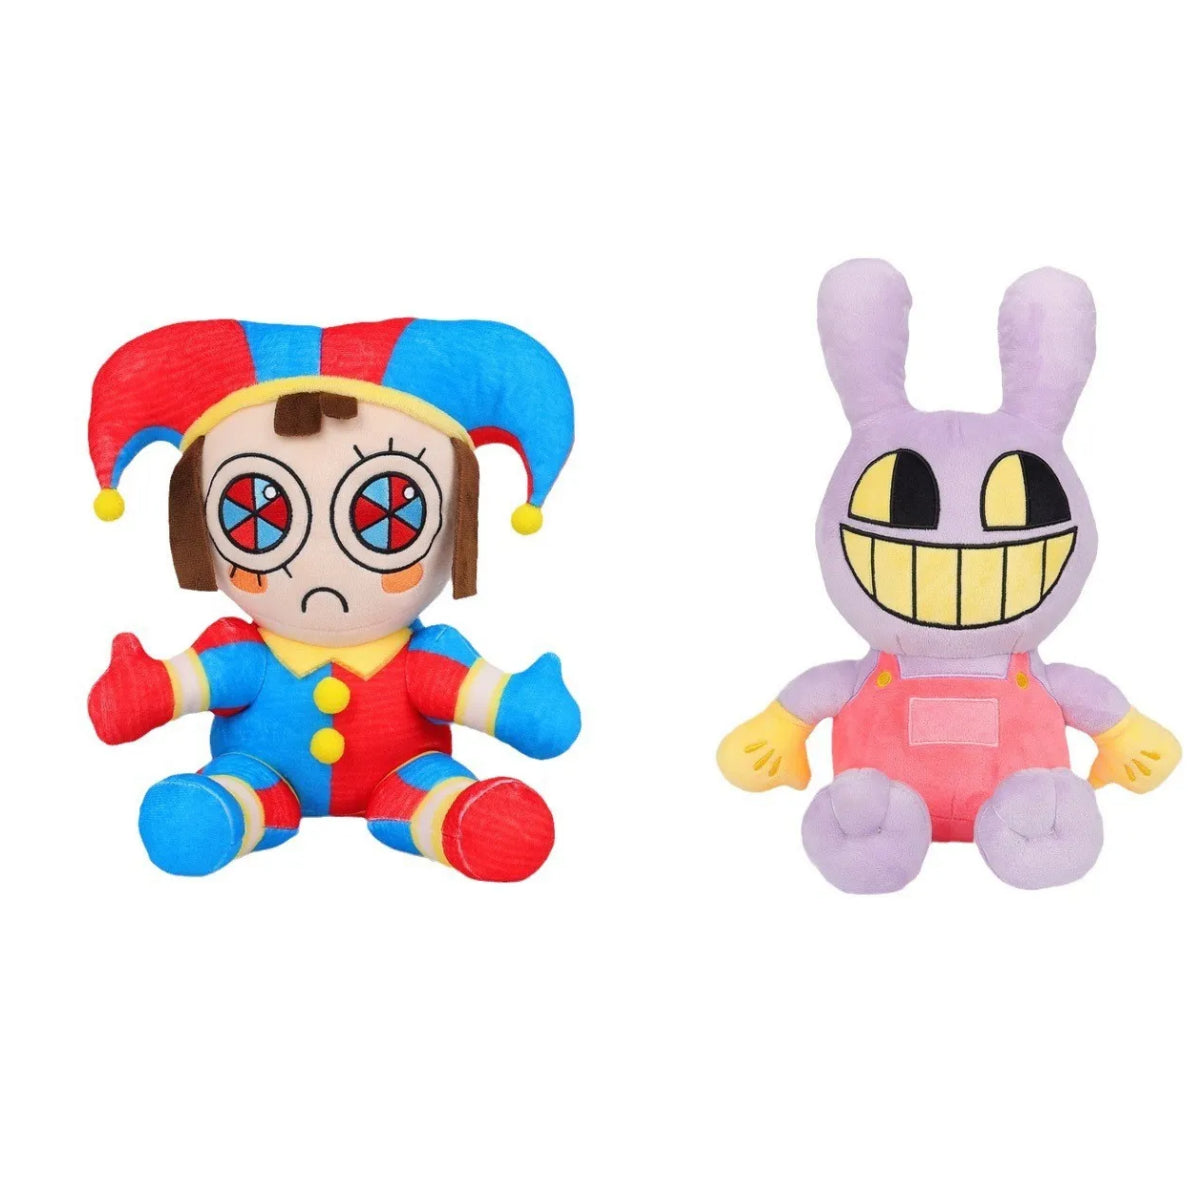 The Amazing Digital Circus Pomni and Jax plush toy, 11.2 inch